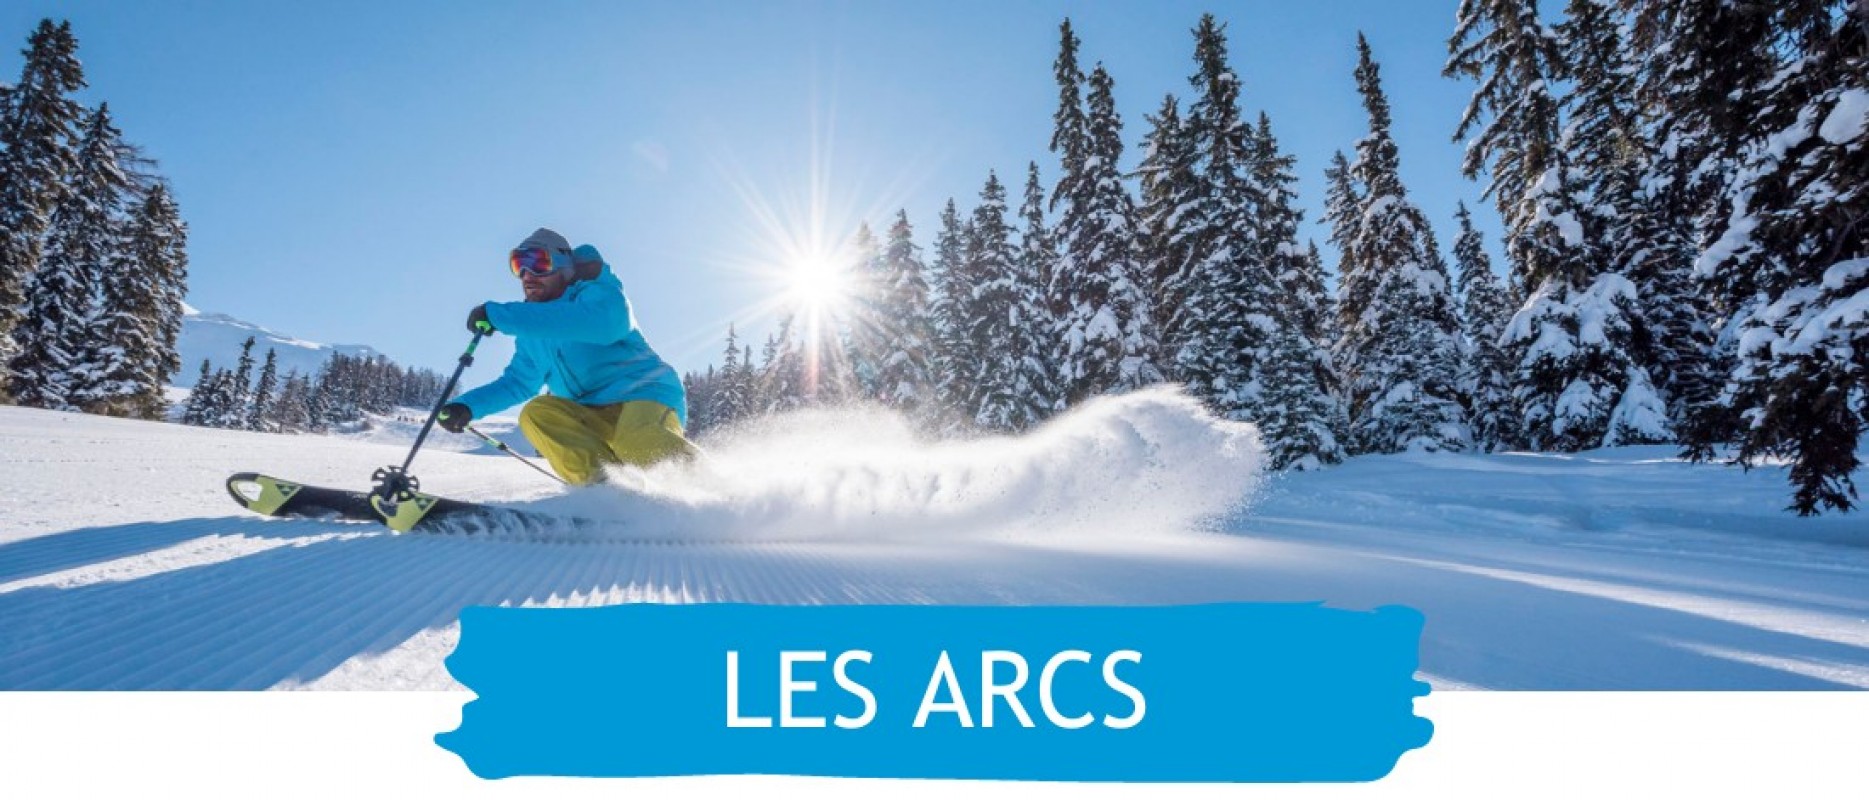 Les Arcs 8 night ski train package